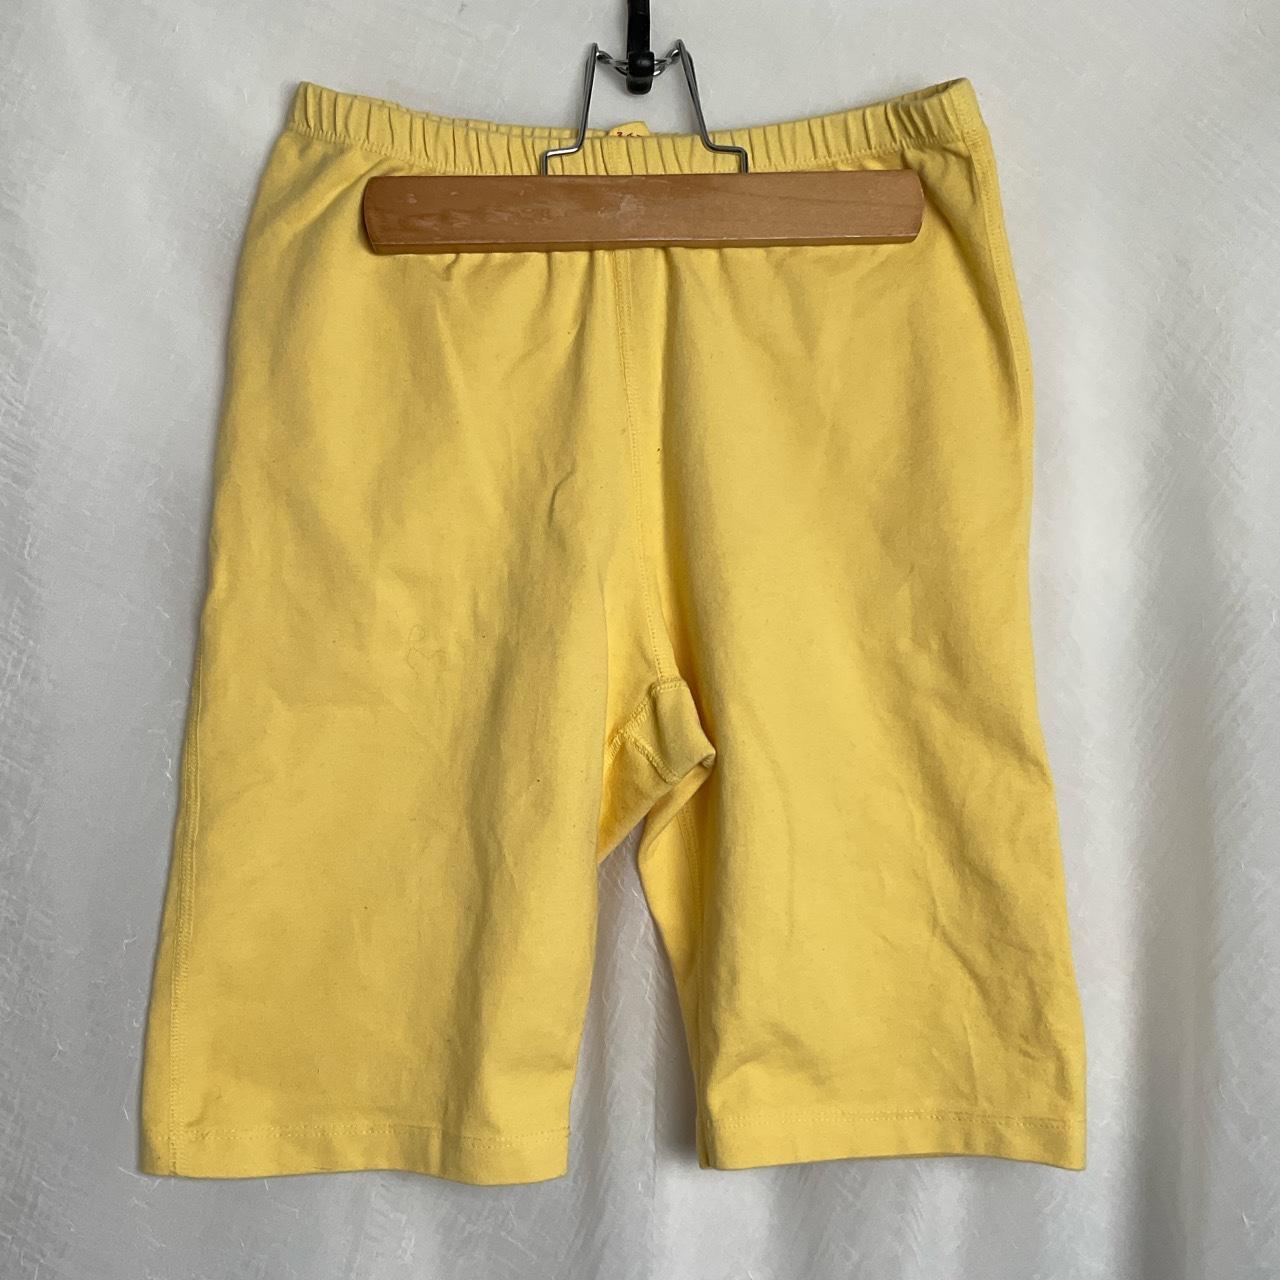 Pansy Women's Yellow Shorts (2)